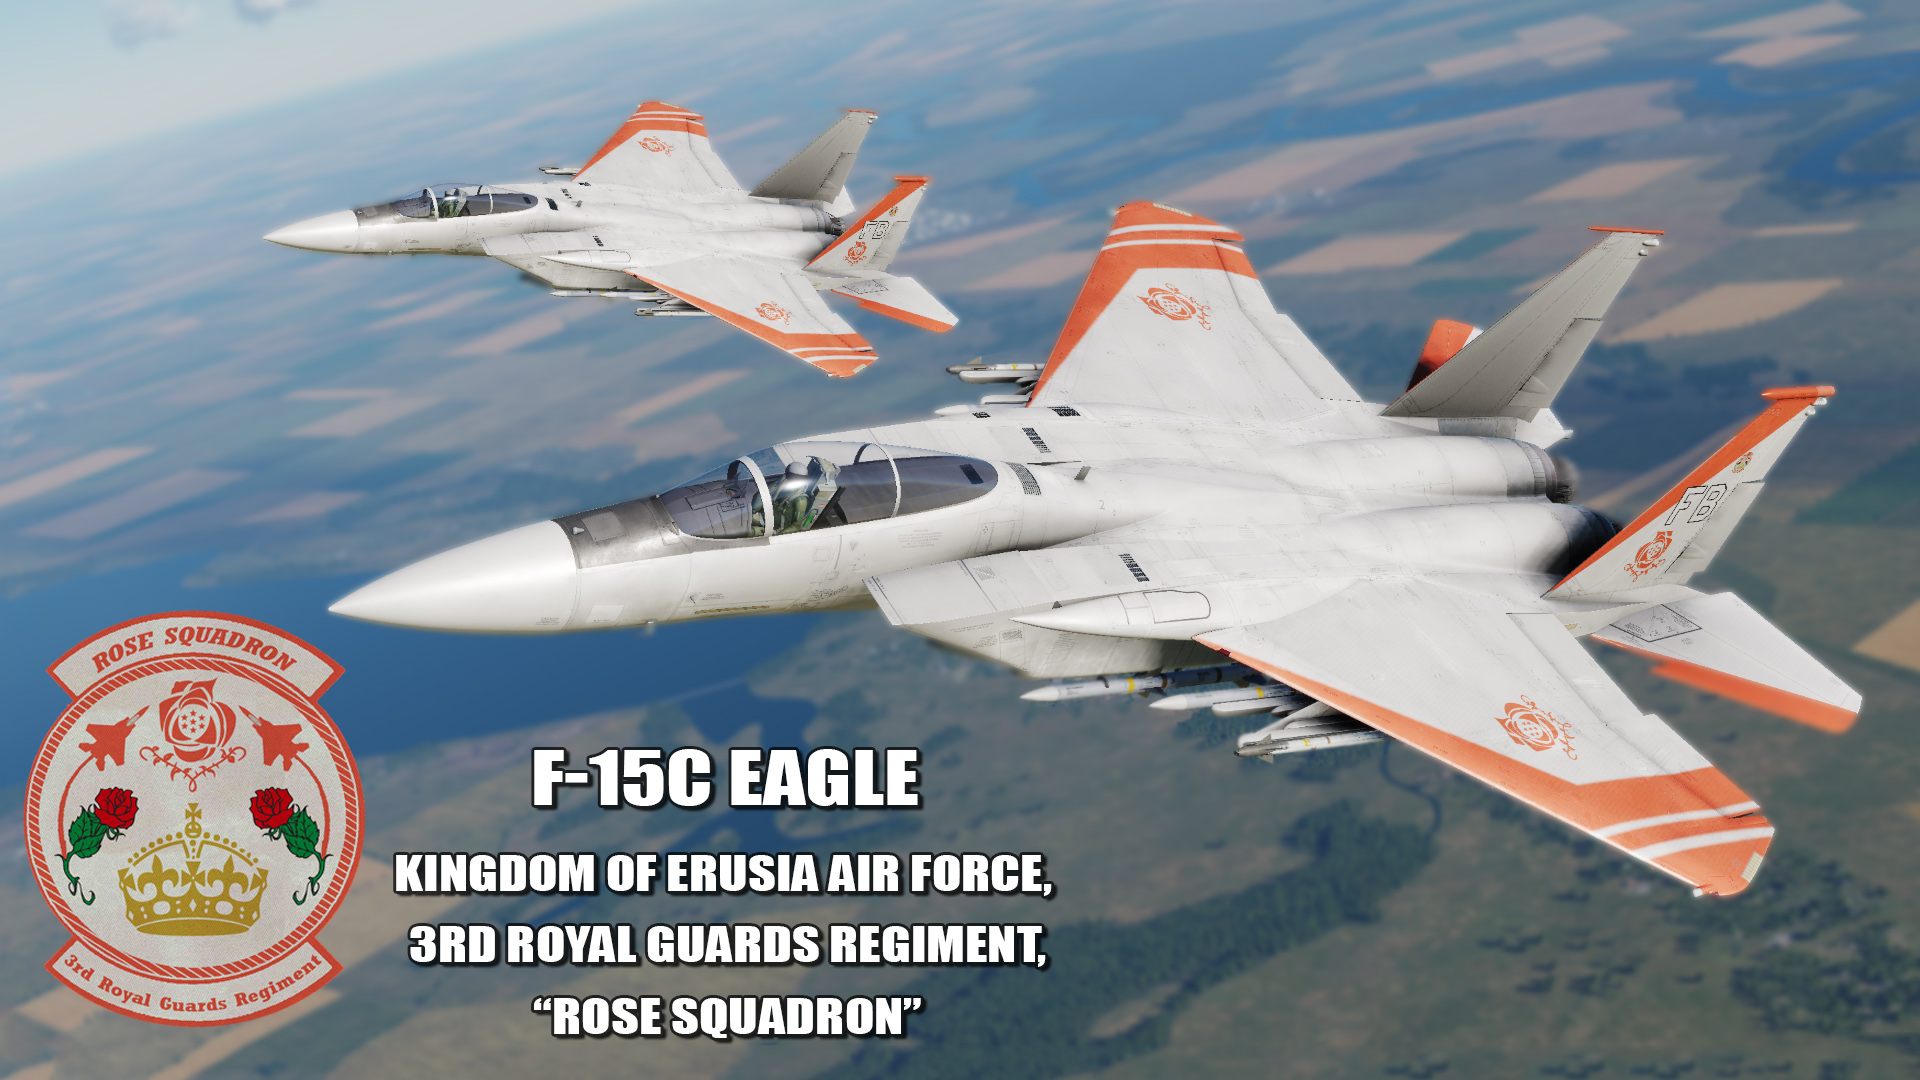 Ace Combat - Kingdom of Erusea Air Force 3rd Royal Guards Regiment "Rose Squadron" F-15C Eagle